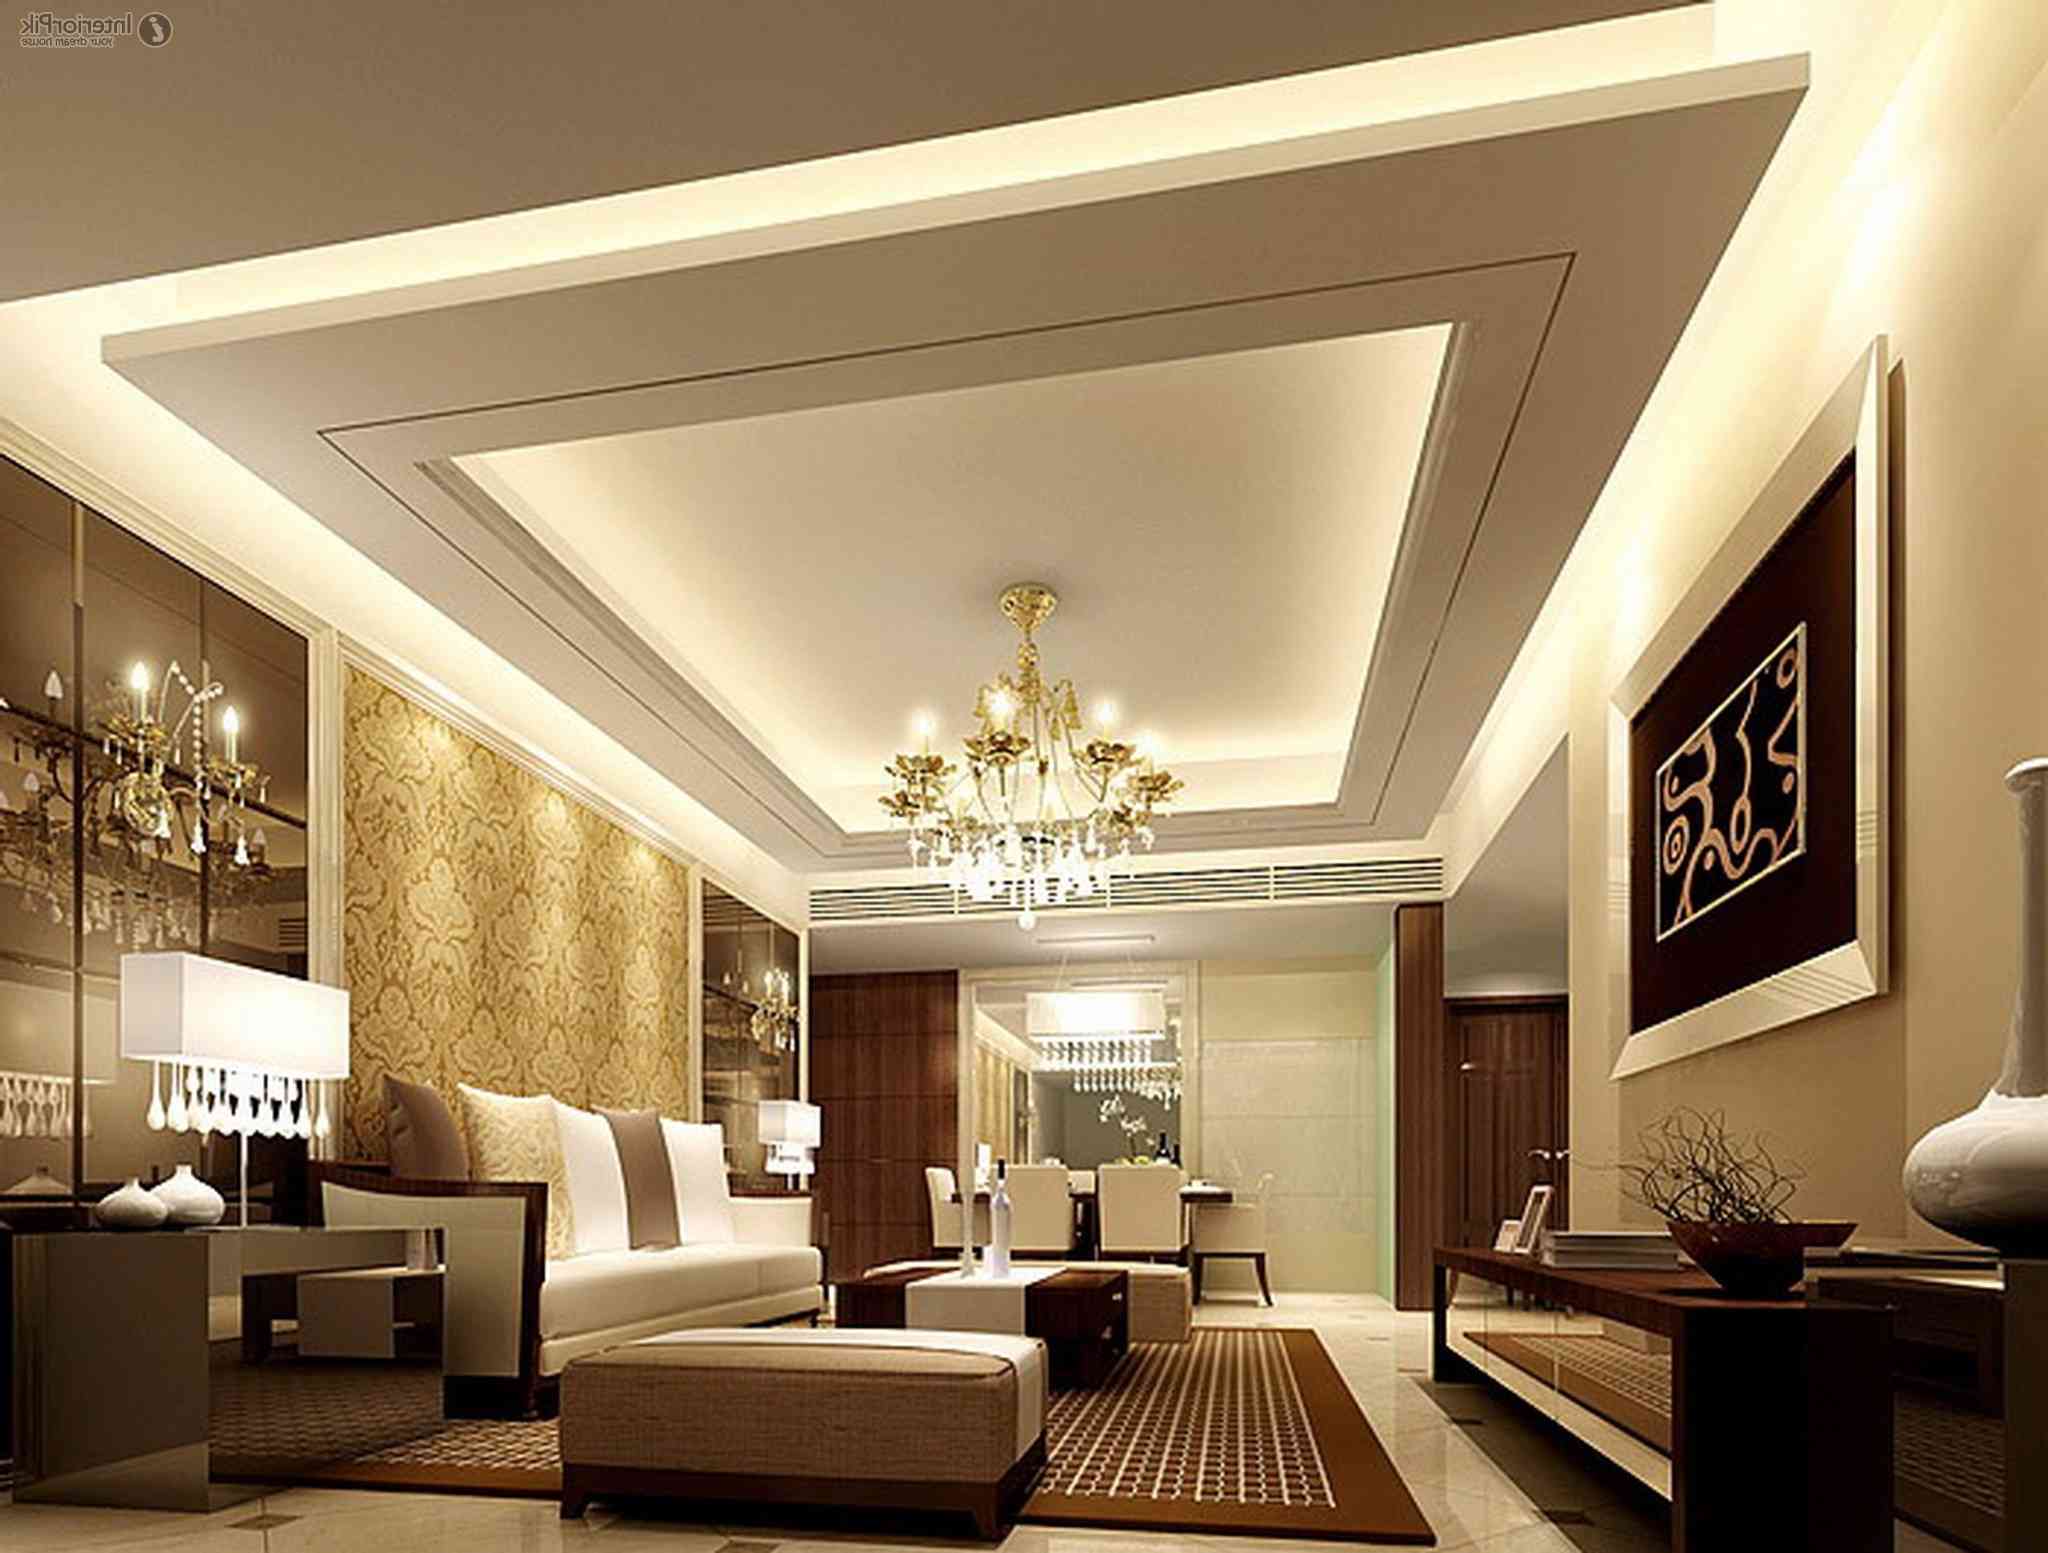 Elegant Ceiling with Proper Use of LED Lighting